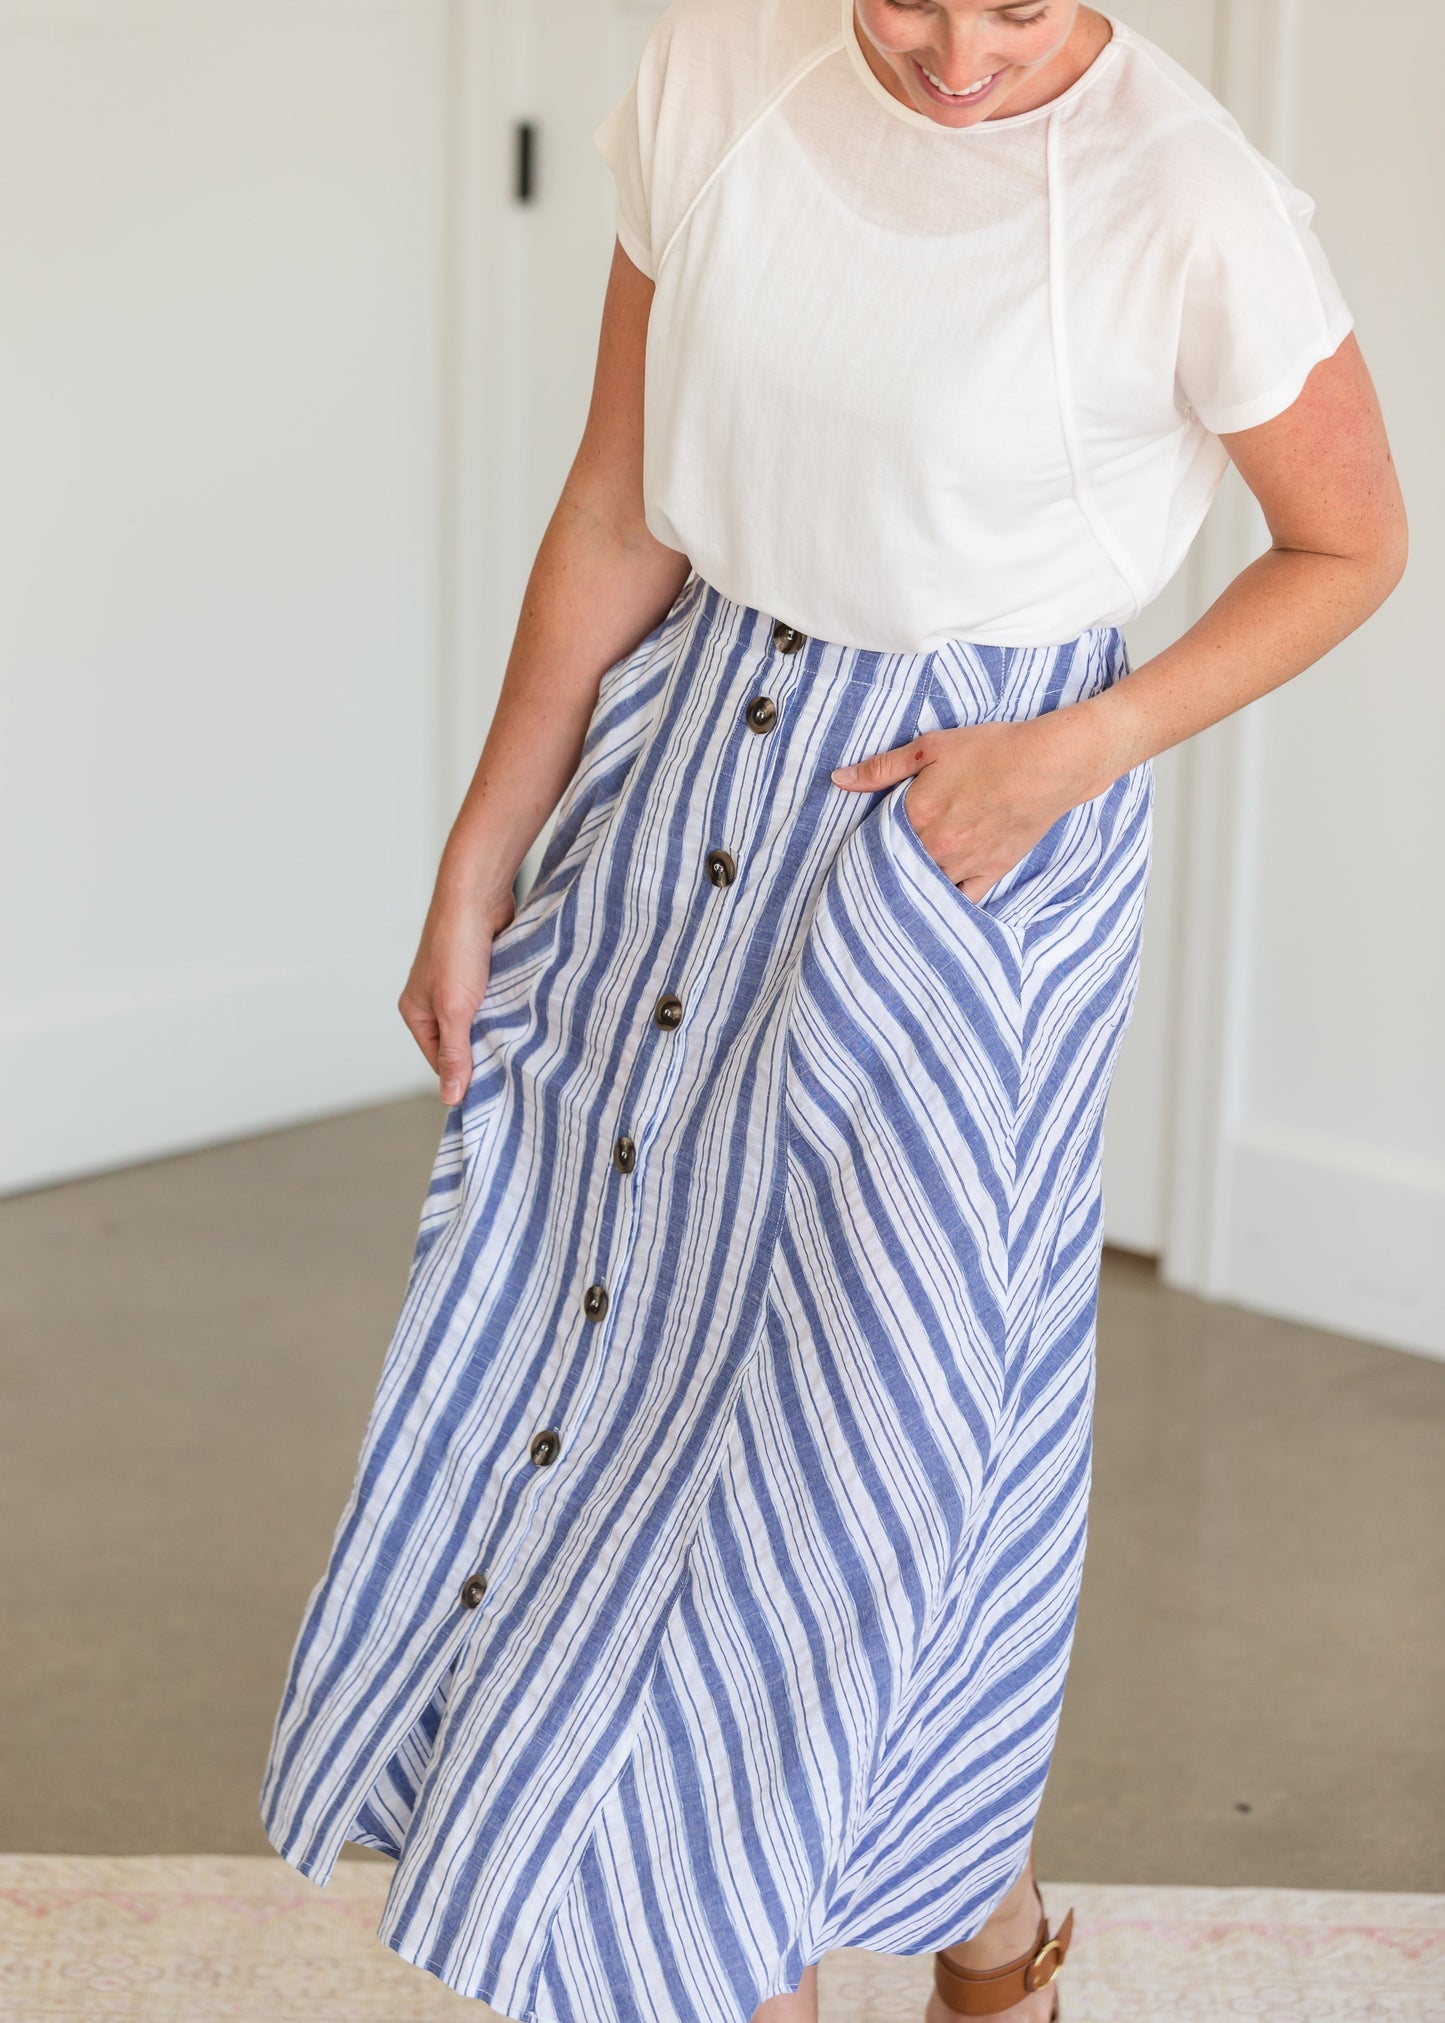 Blue Striped Button Down Midi Skirt - FINAL SALE Skirts